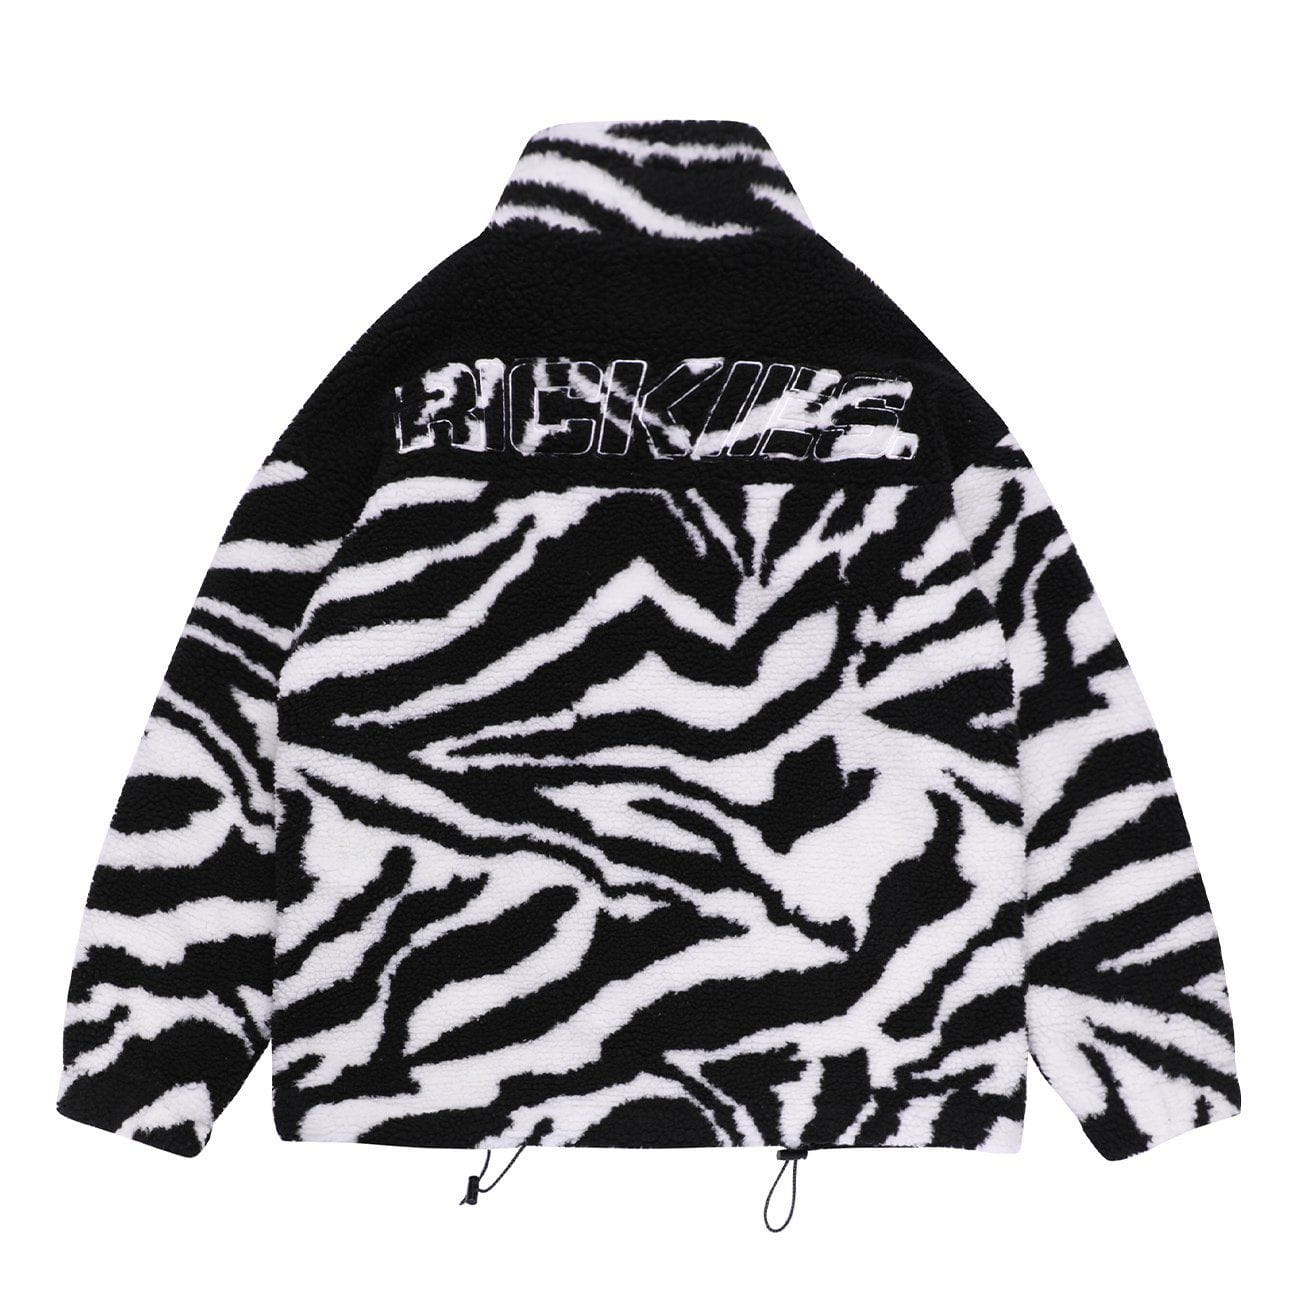 Majesda® - Zebra Pattern Sherpa Jacket outfit ideas streetwear fashion